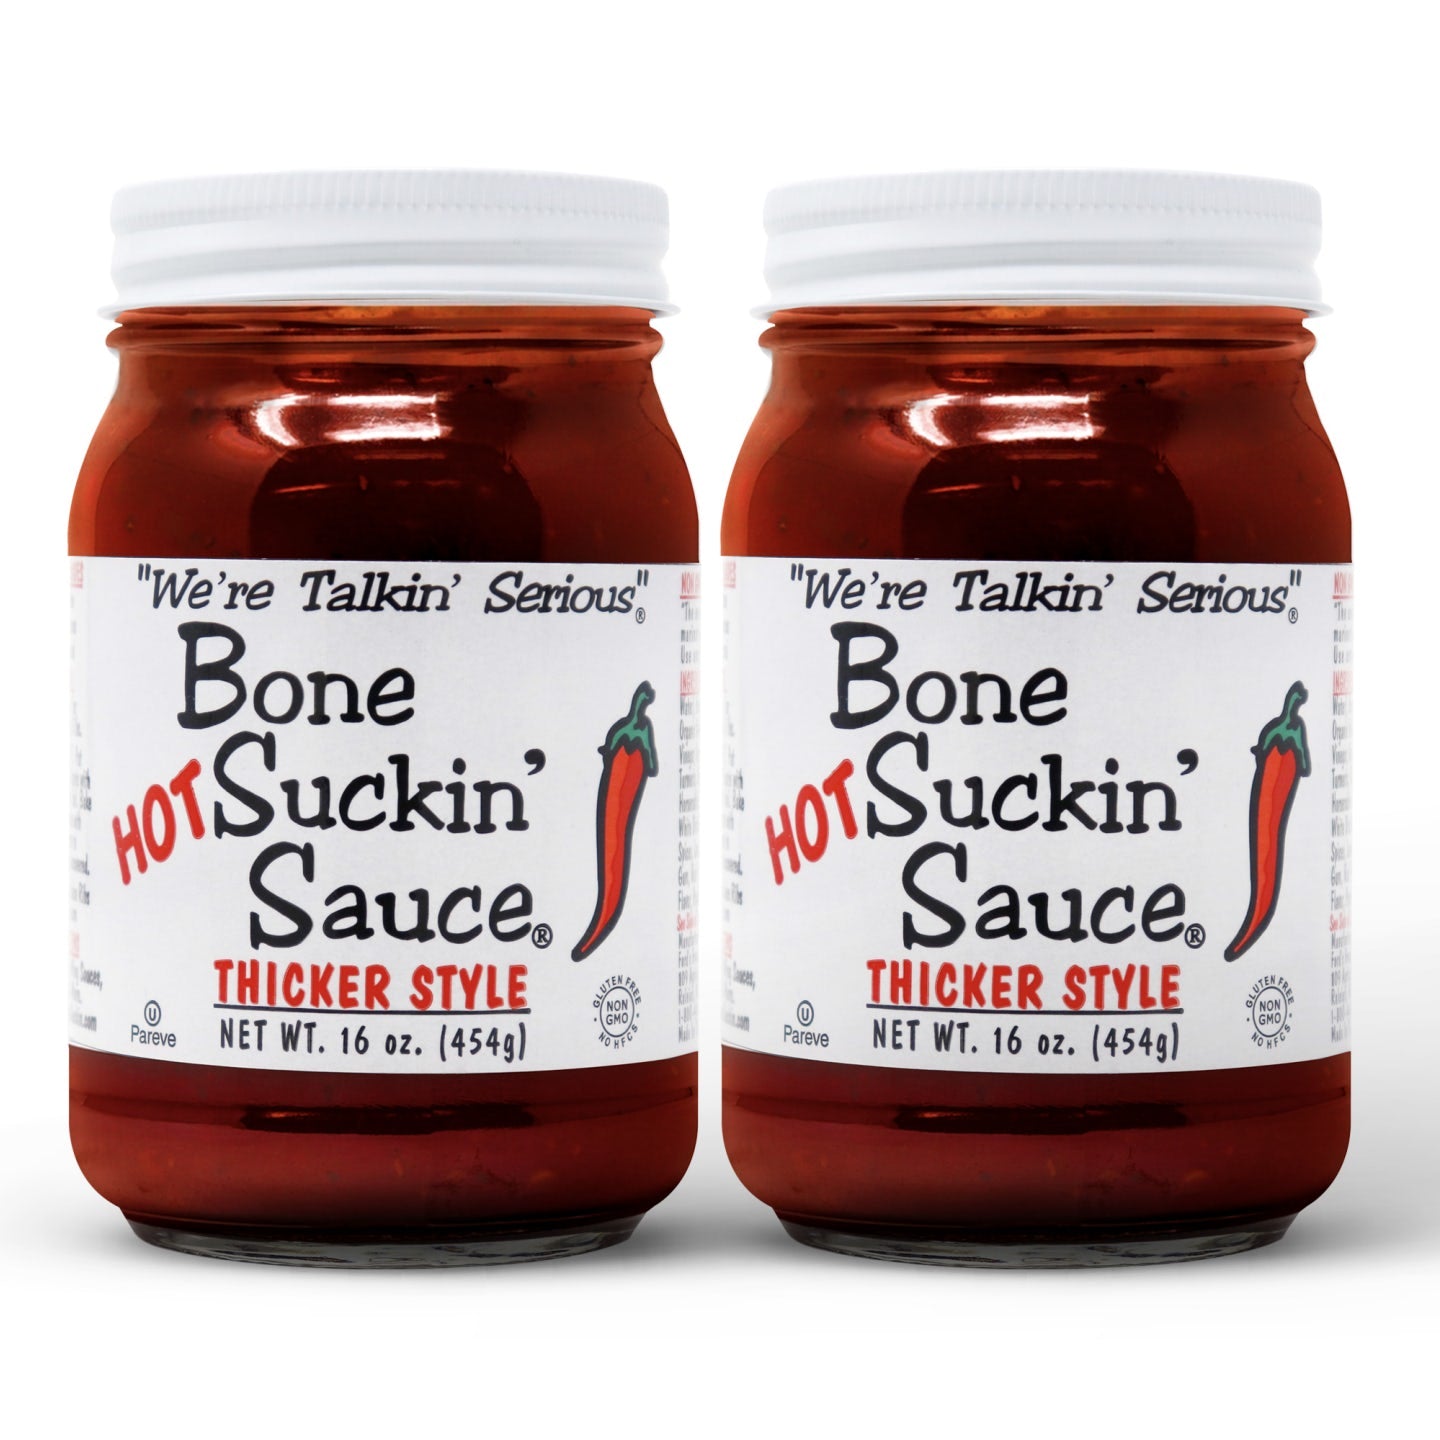 Bone Suckin' Sauce Hot Thicker Style, 16 oz, 2 pack